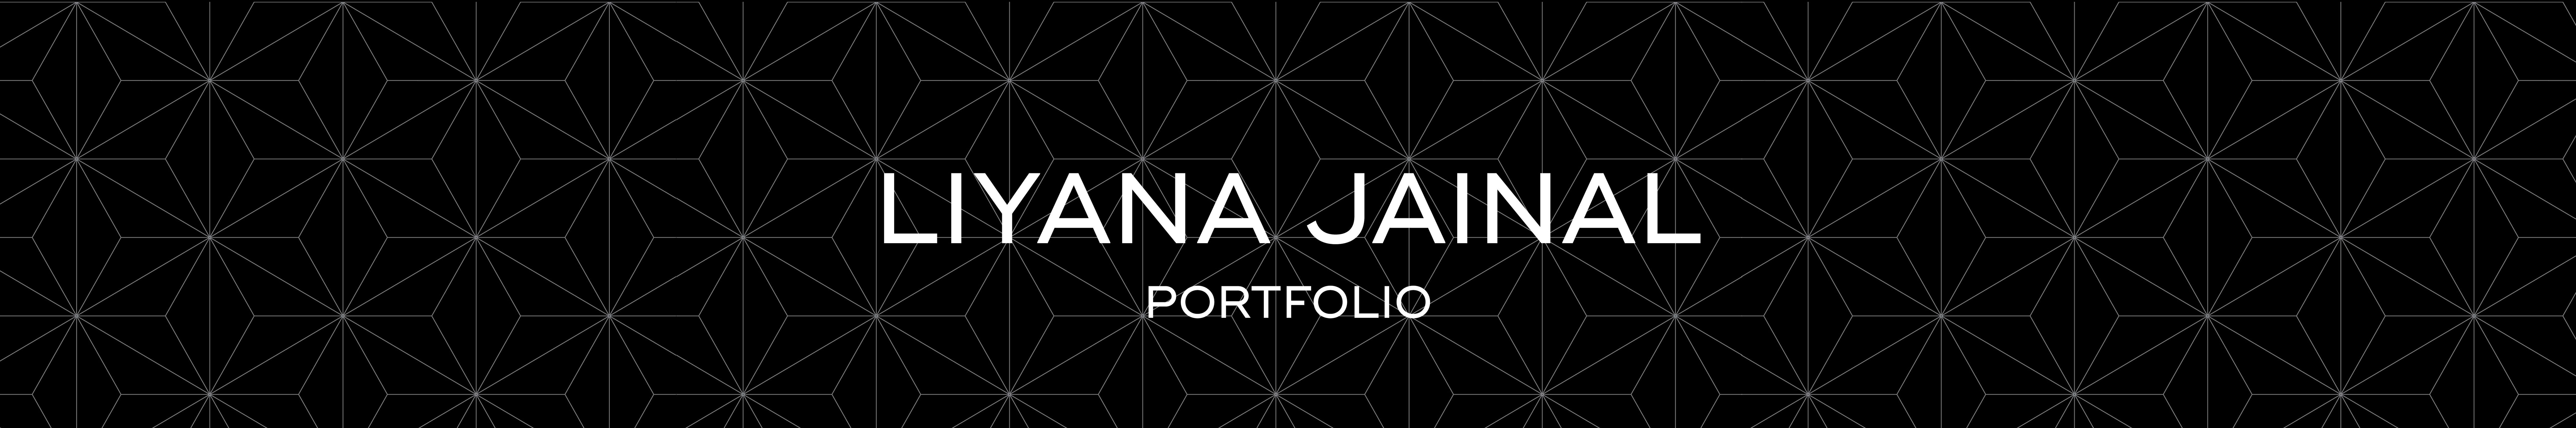 Liyana Jainal's profile banner